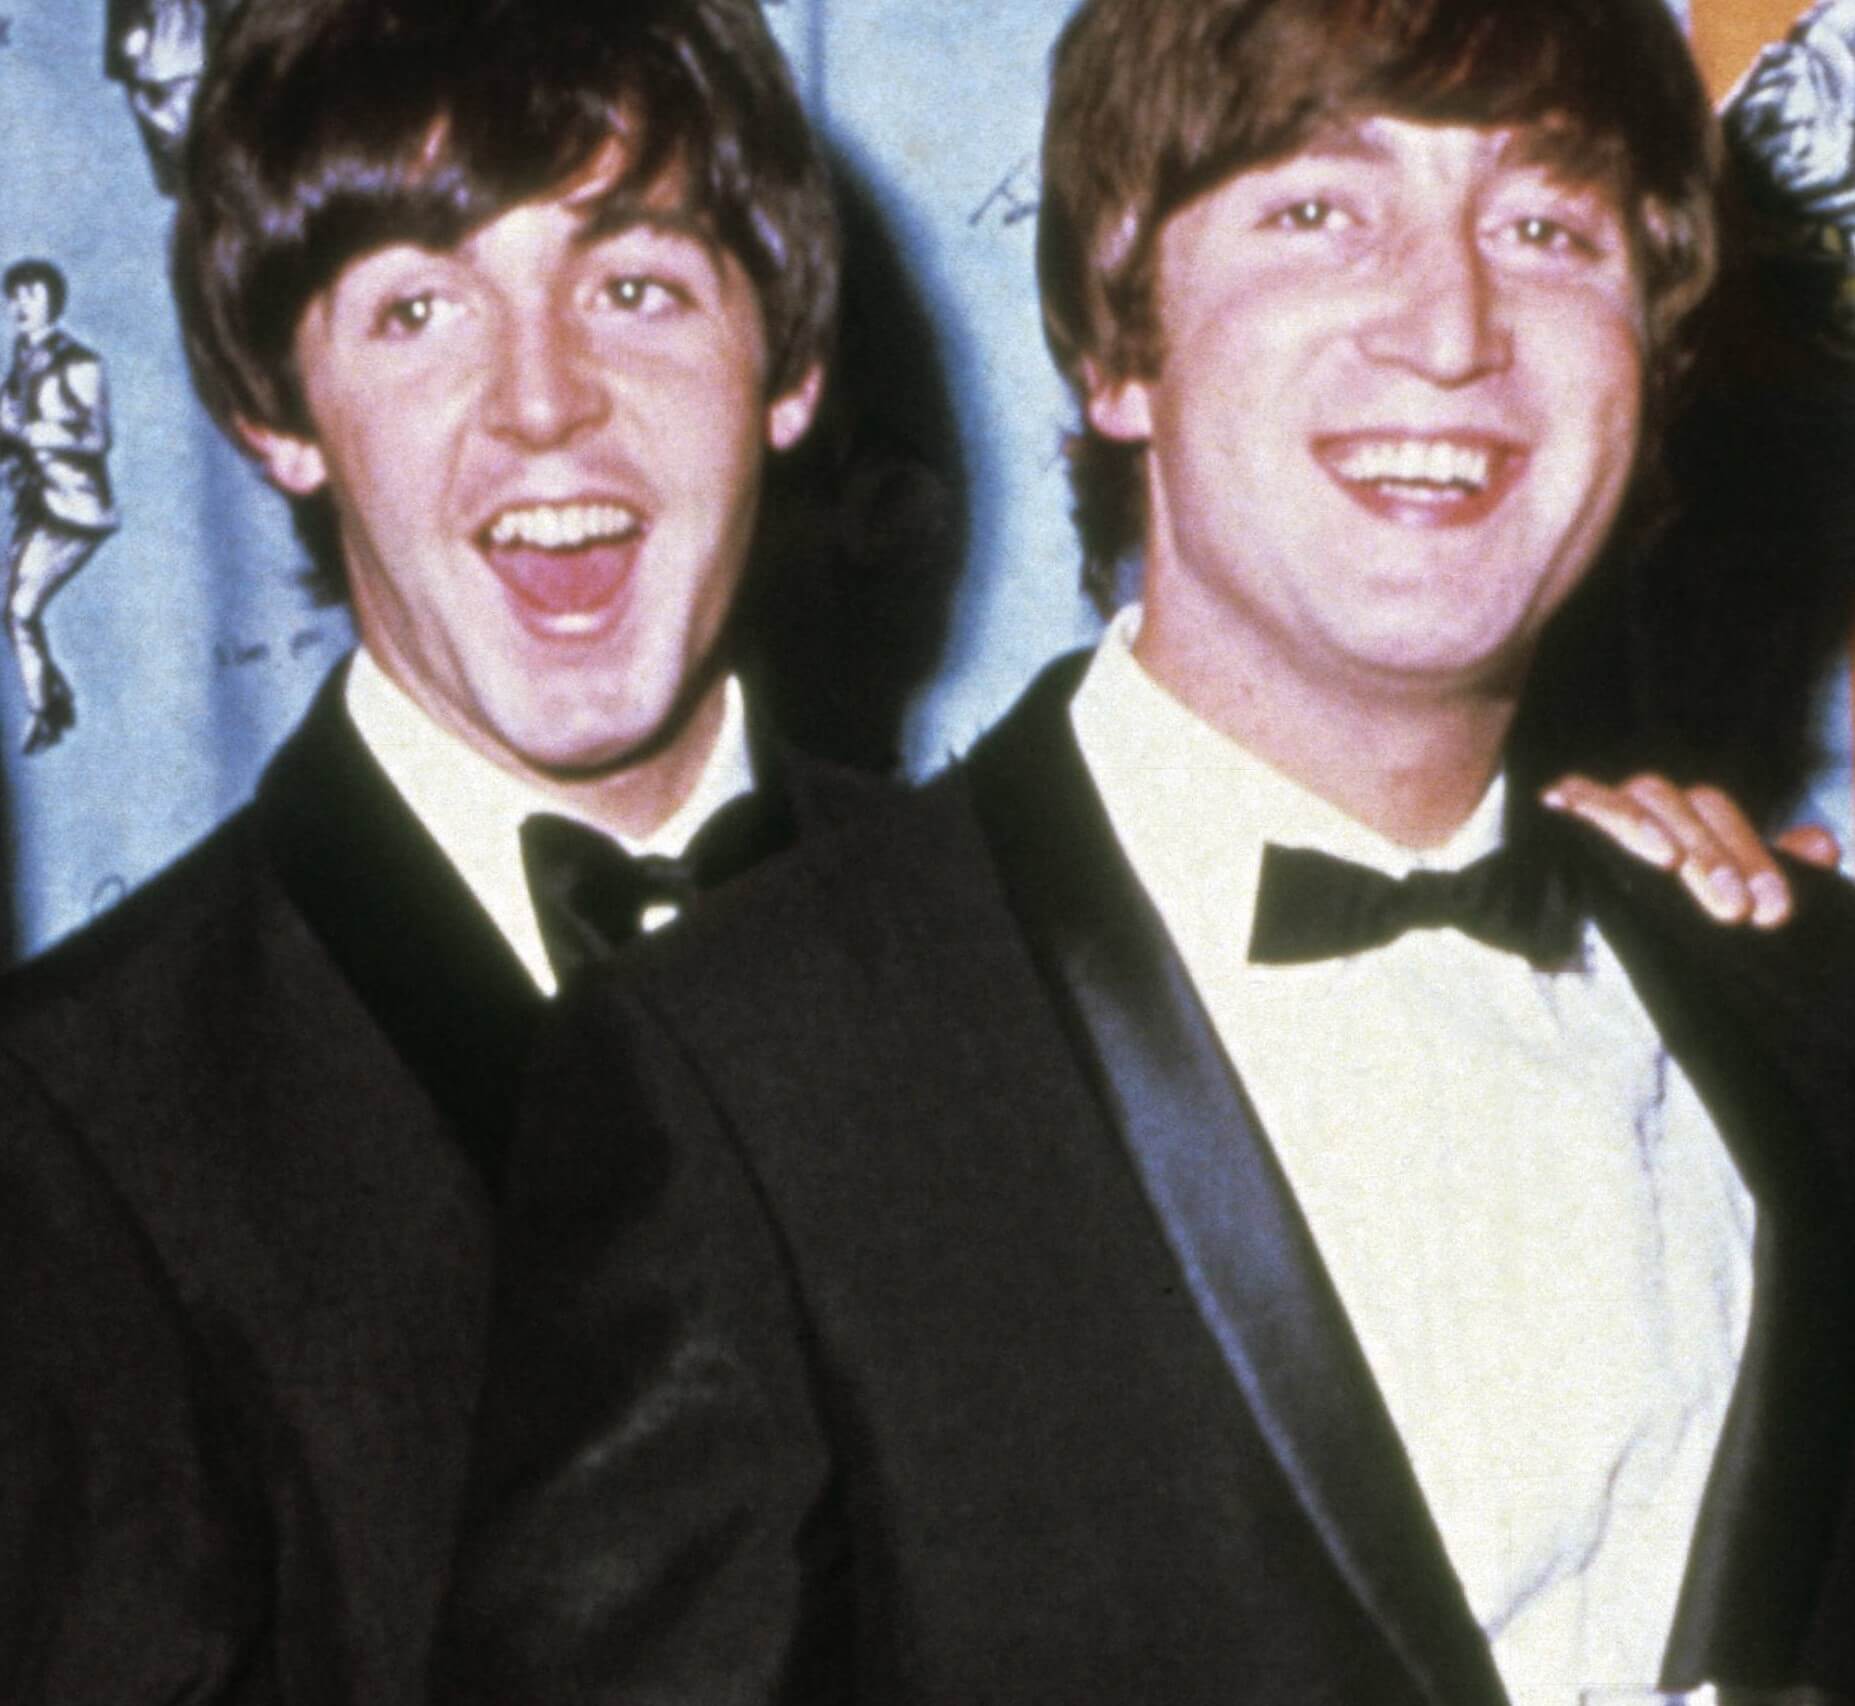 Paul McCartney and John Lennon in suits